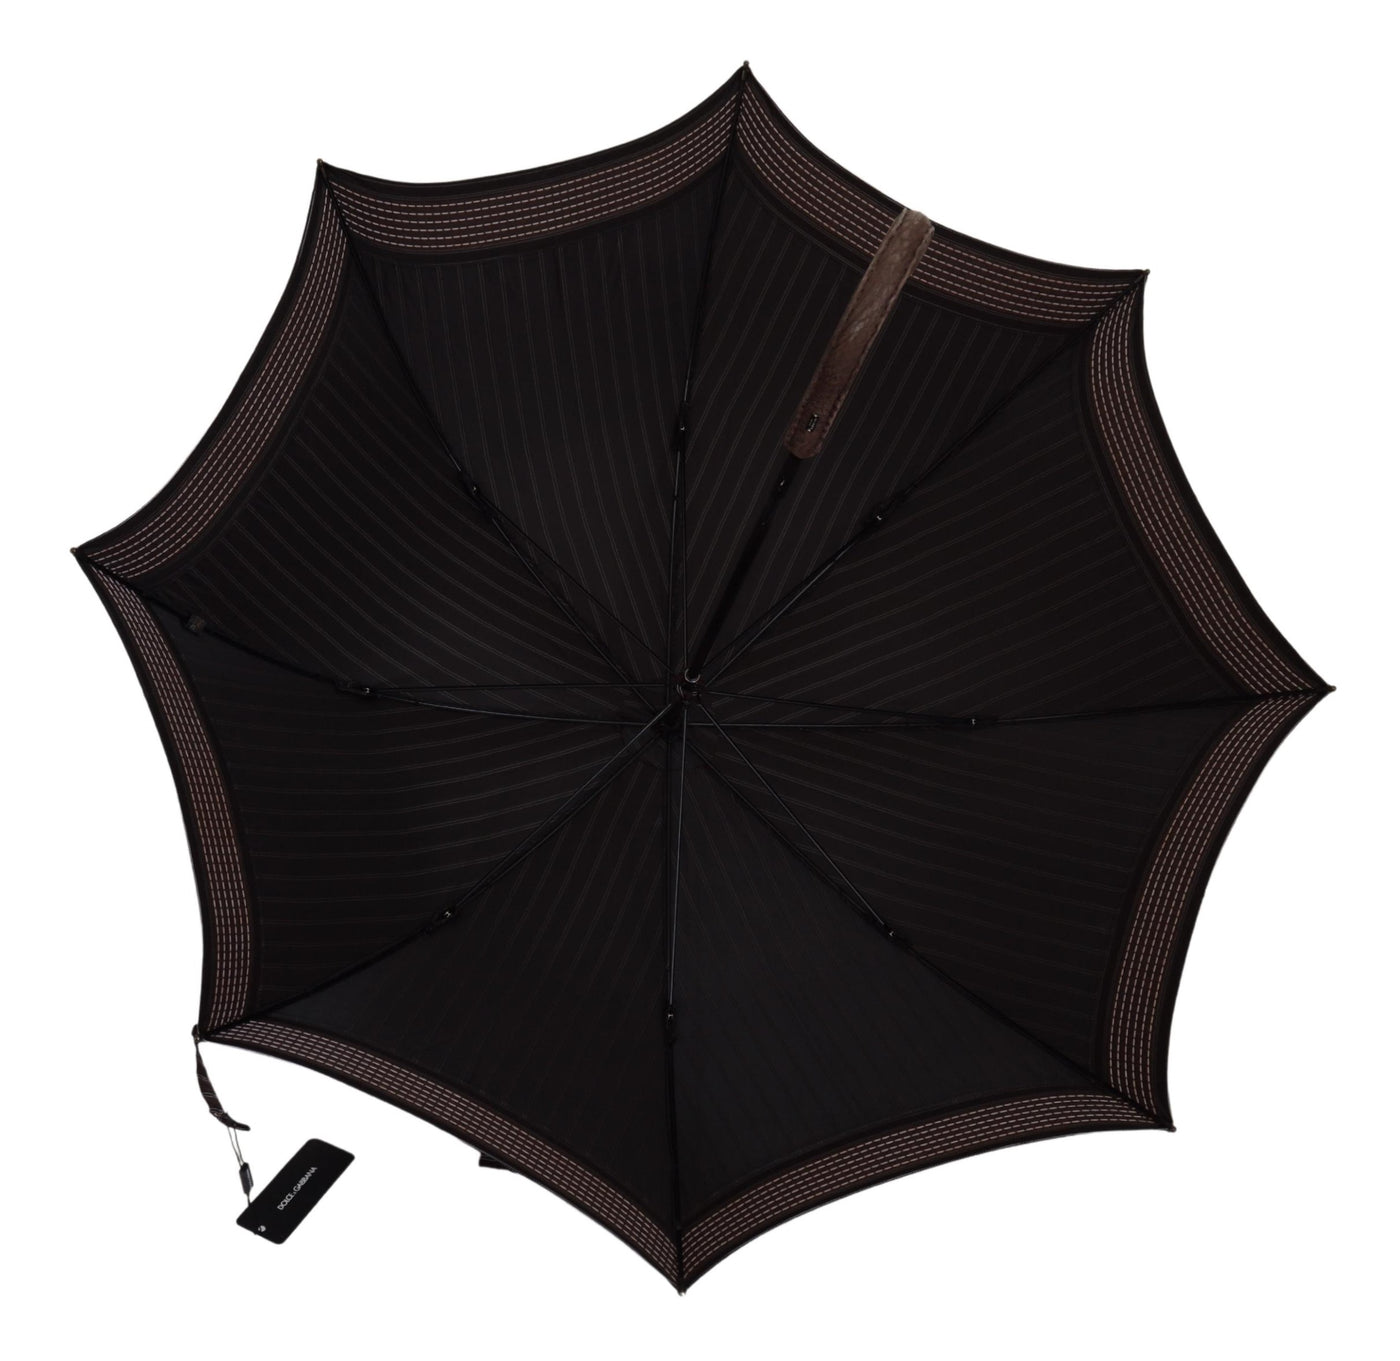 Dolce & Gabbana Brown Striped Leather Handle Collapsible Sartoria Umbrella